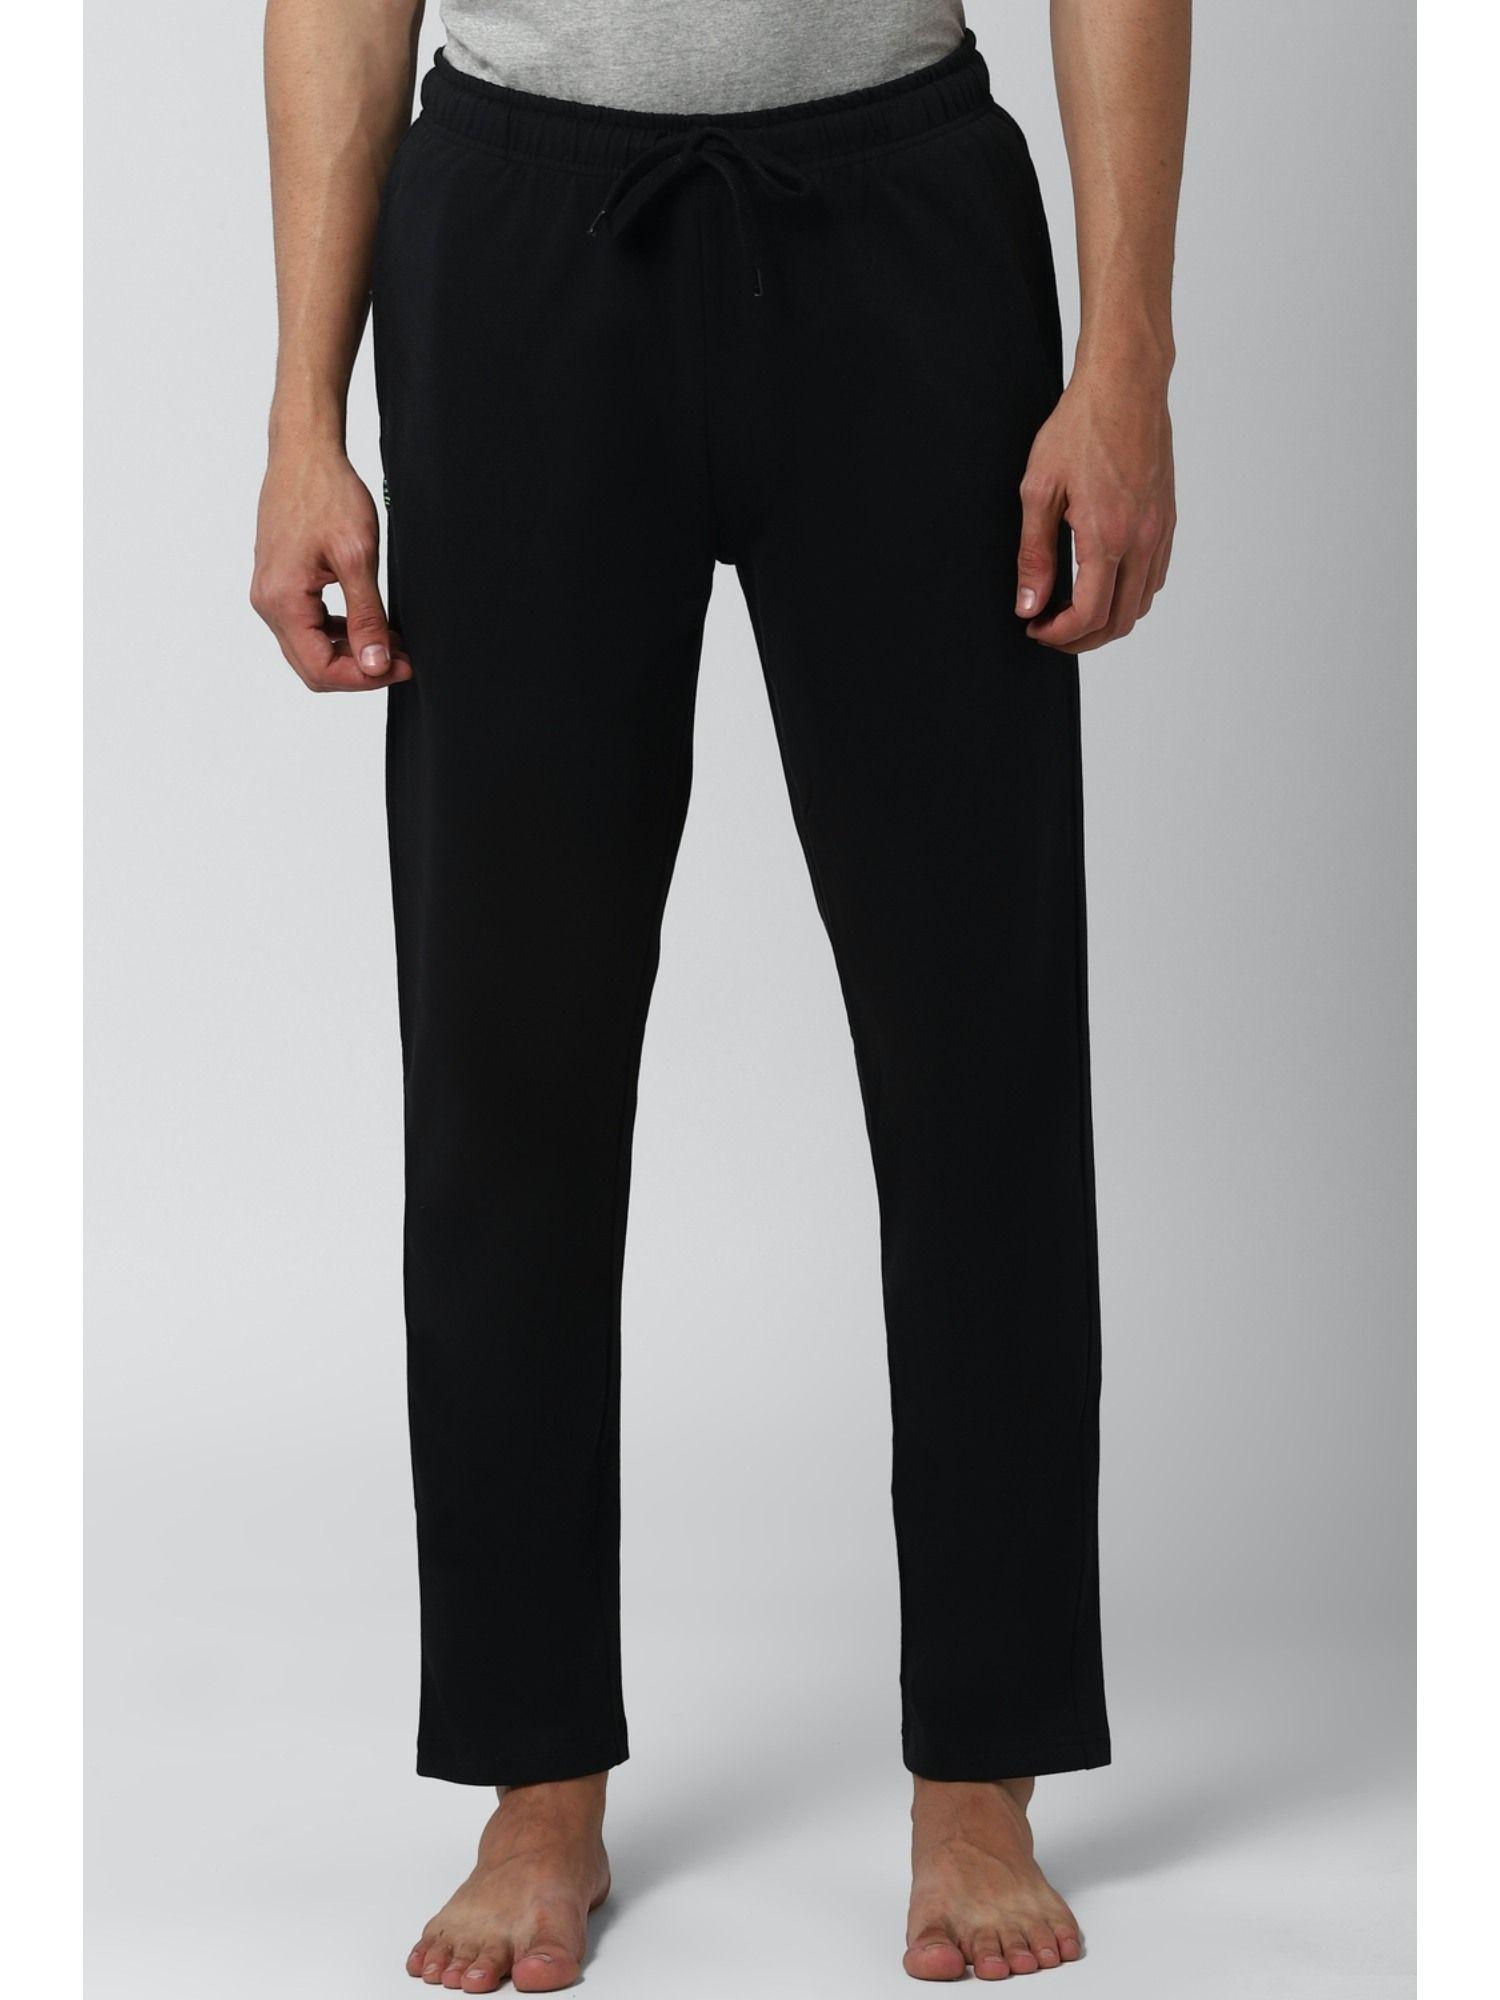 men-black-solid-casual-track-pants